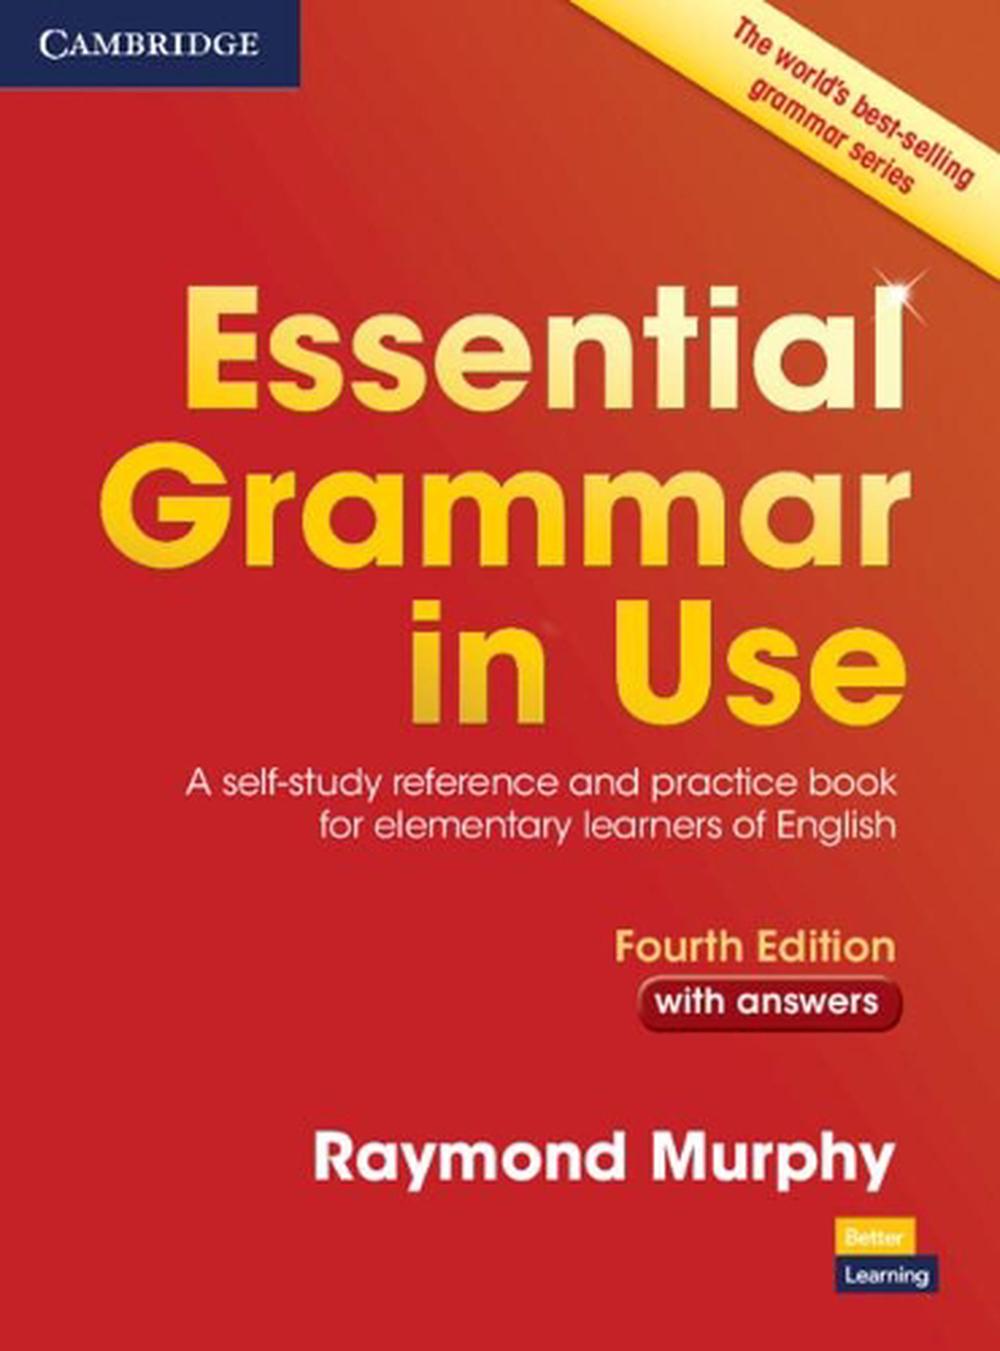 book review on grammar